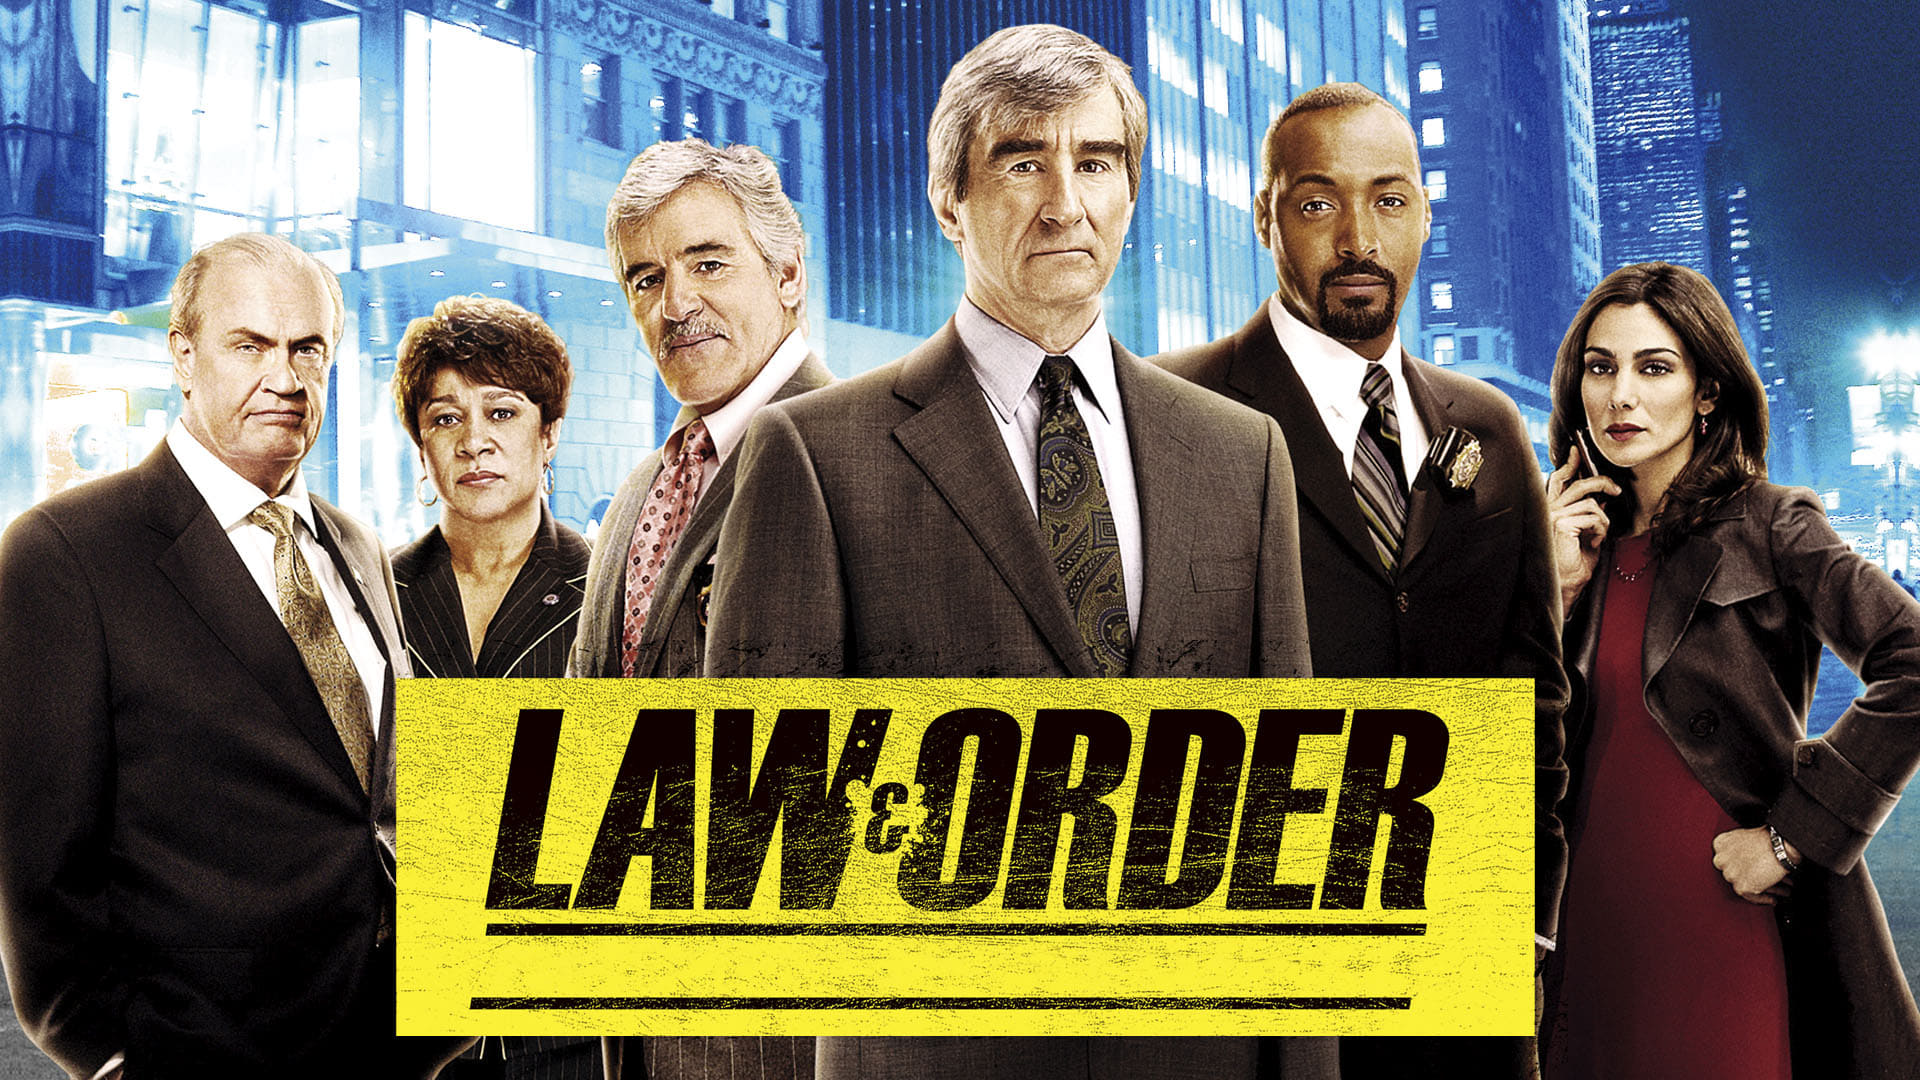 Law+%26+Order